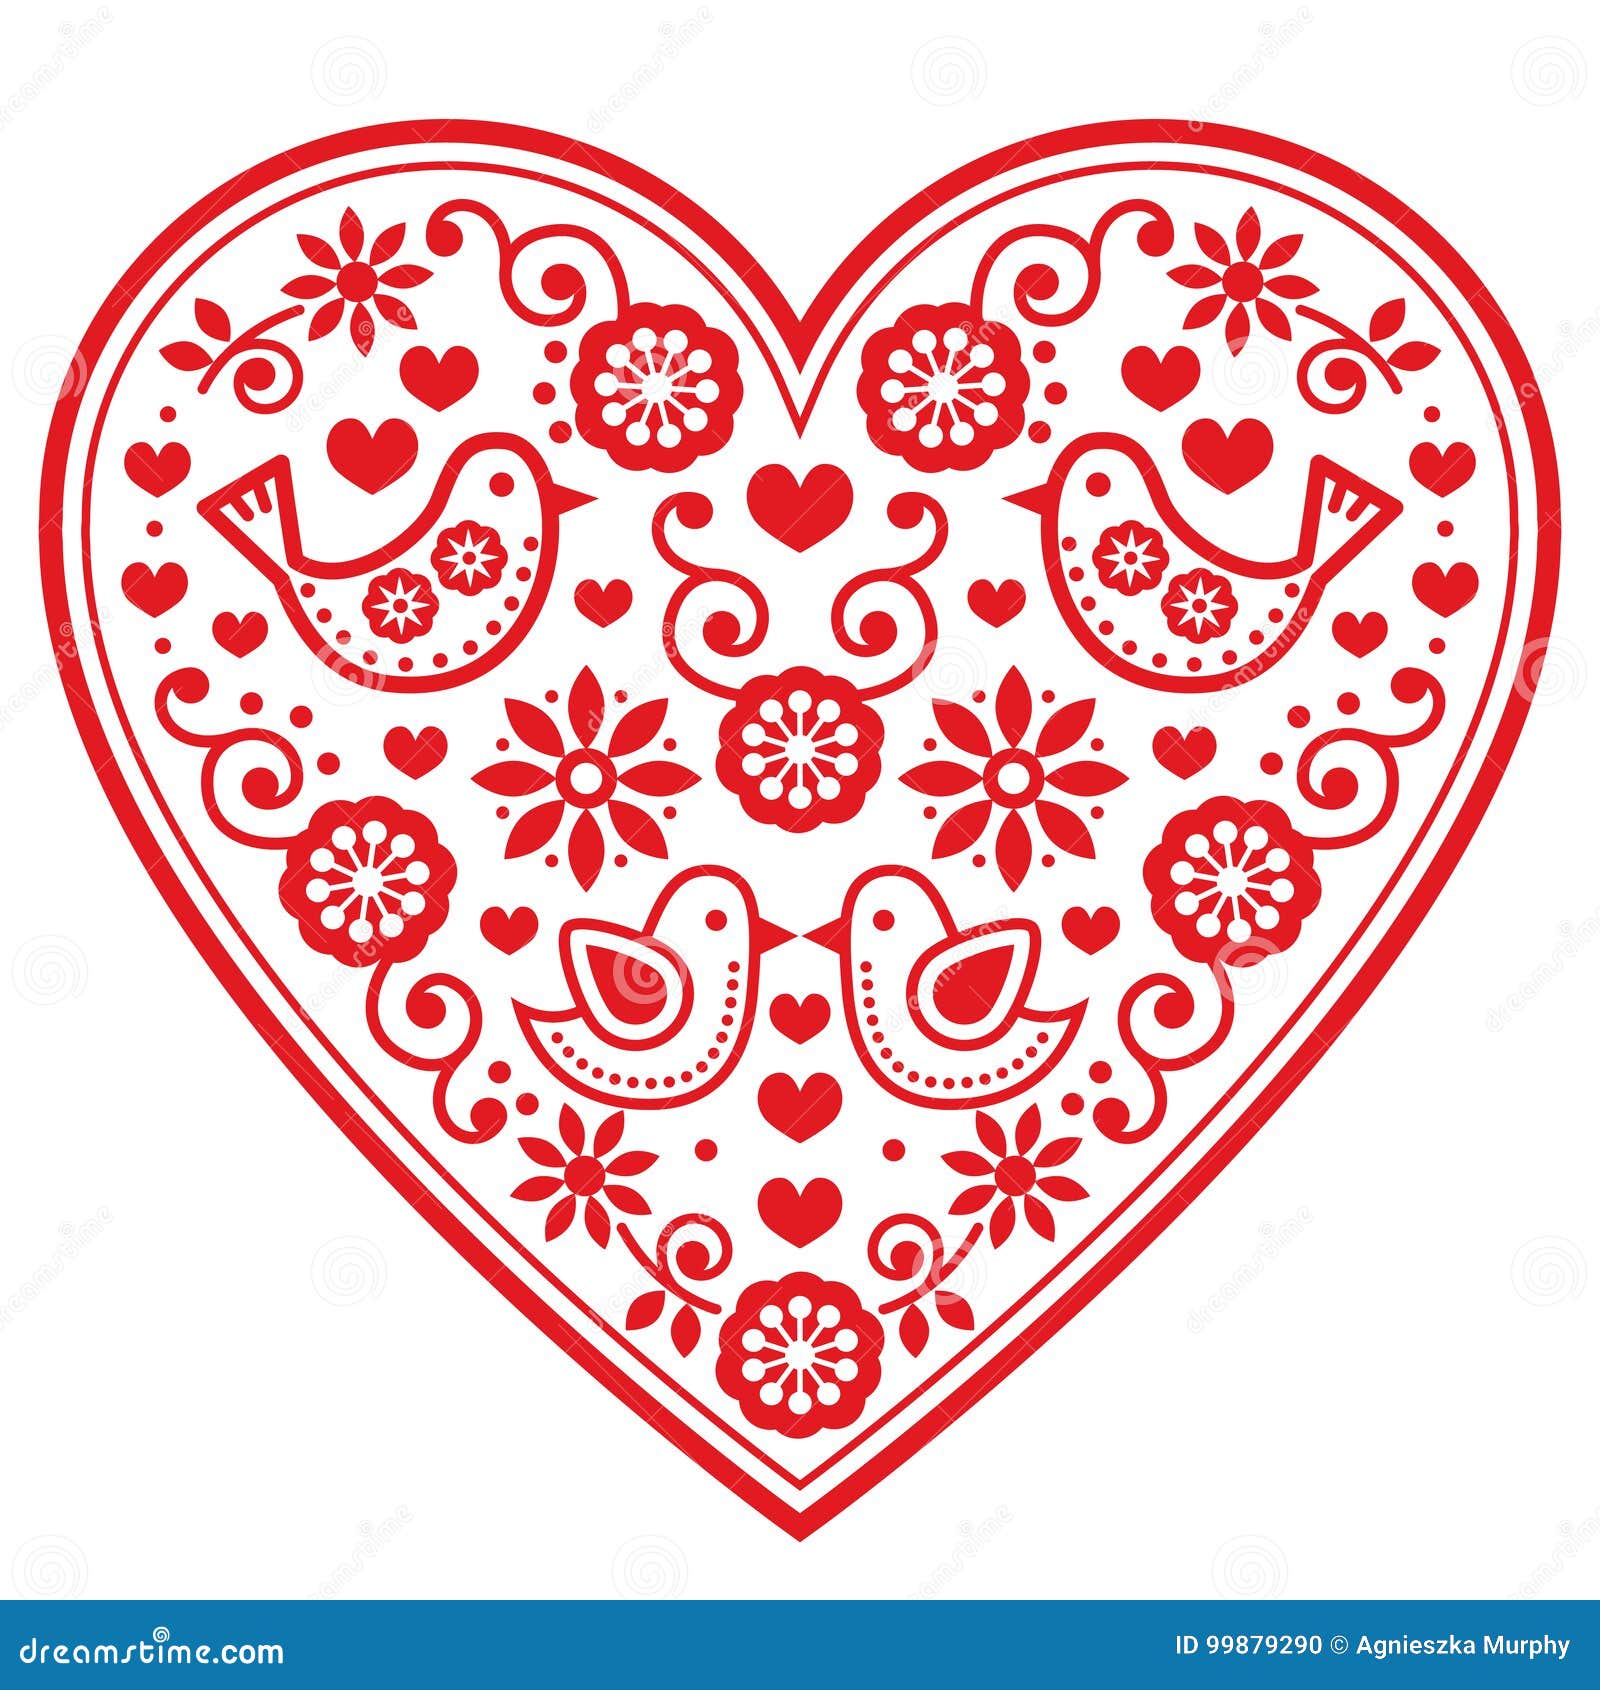 folk heart pattern with flowers and birds - valentine`s day, wedding, birthday greeting card